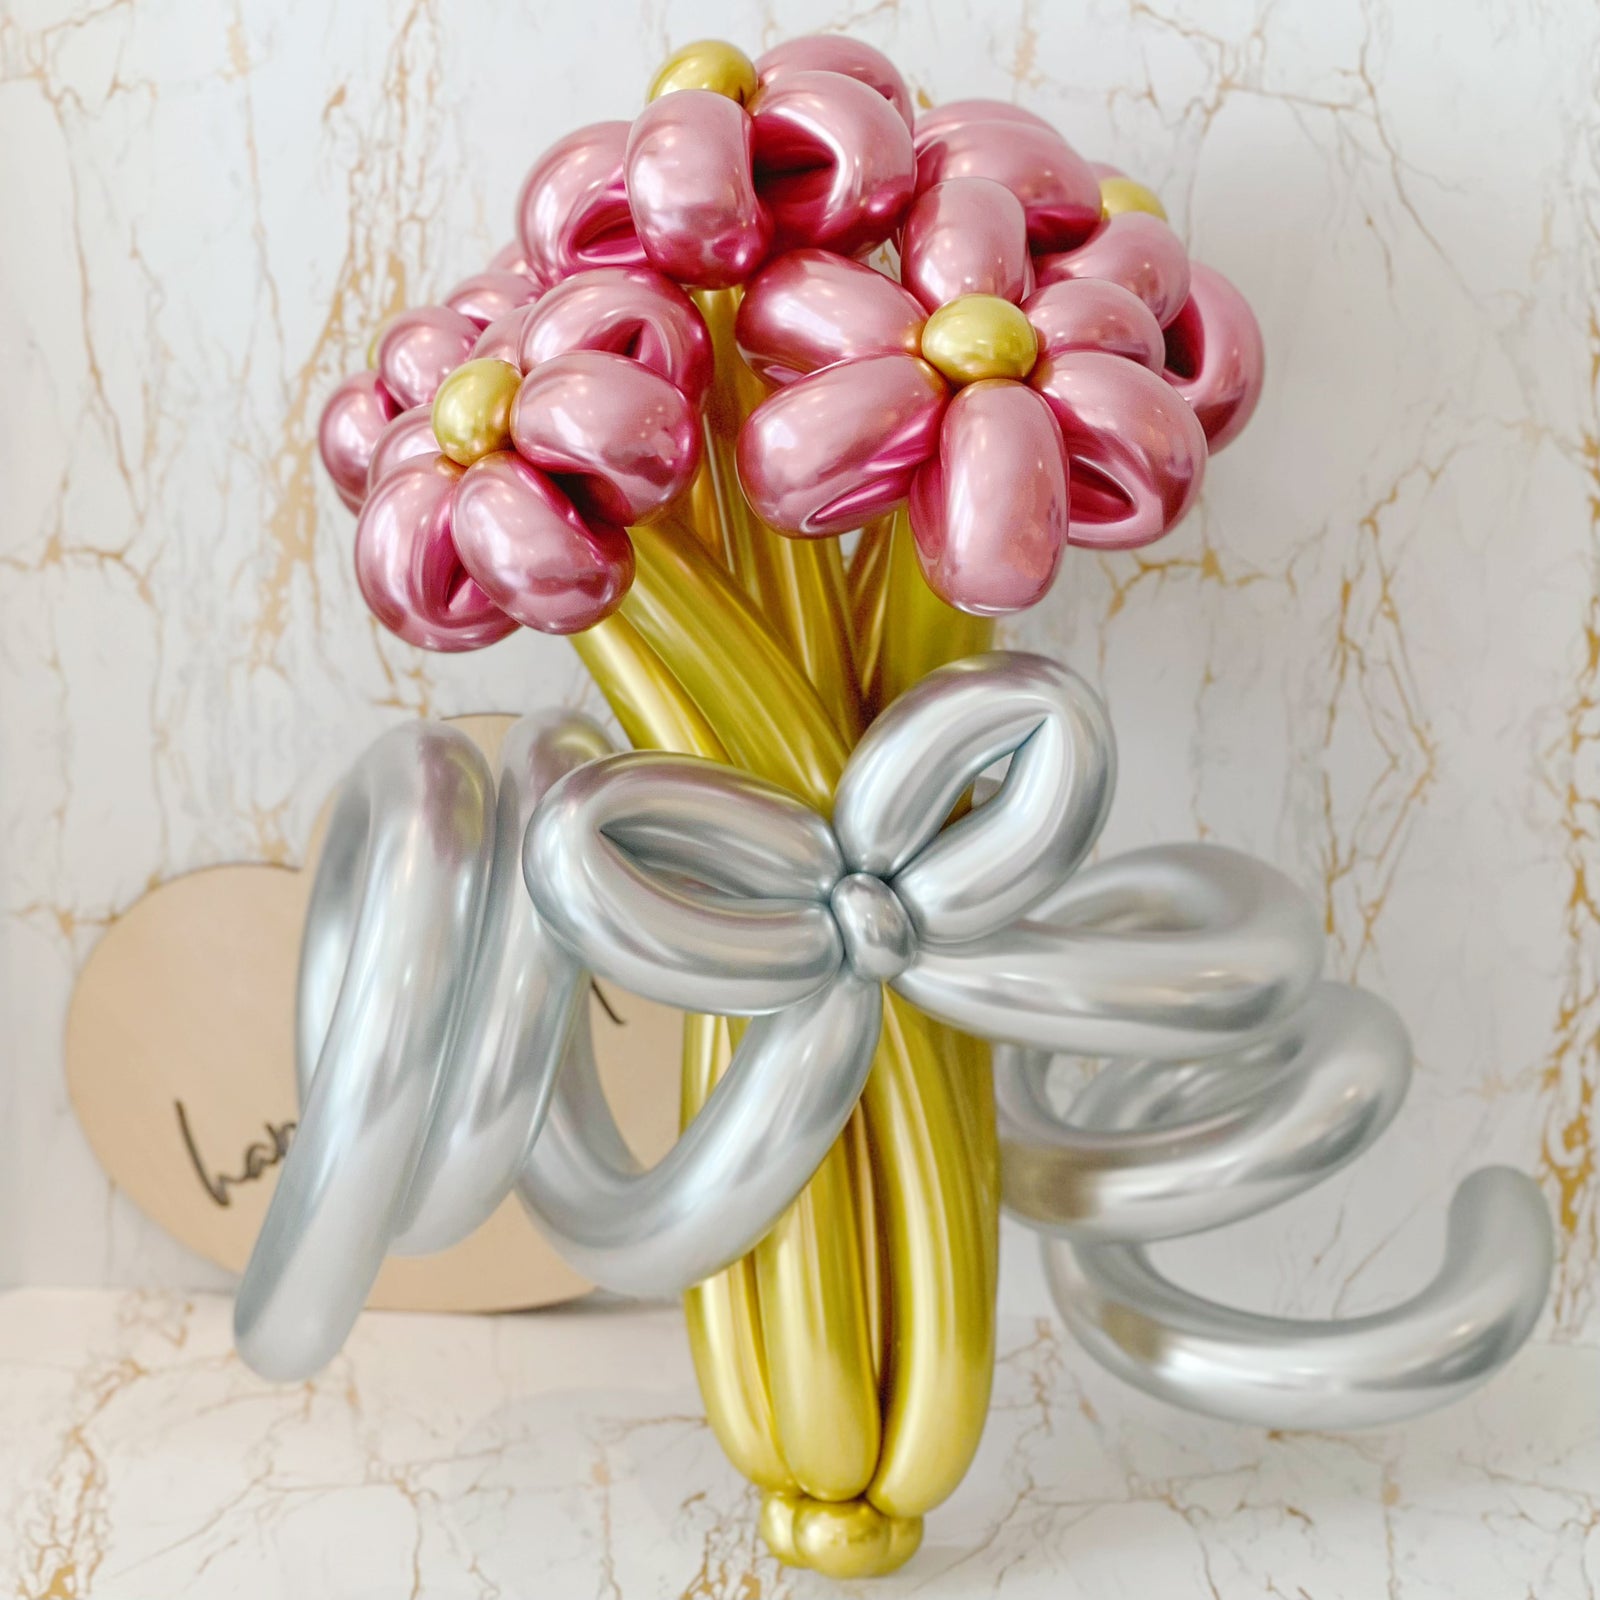 Chrome Floral - Balloon Flower Bouquet Arrangement - Rainbowly Fresh Fruit Gift and Flower Arrangments